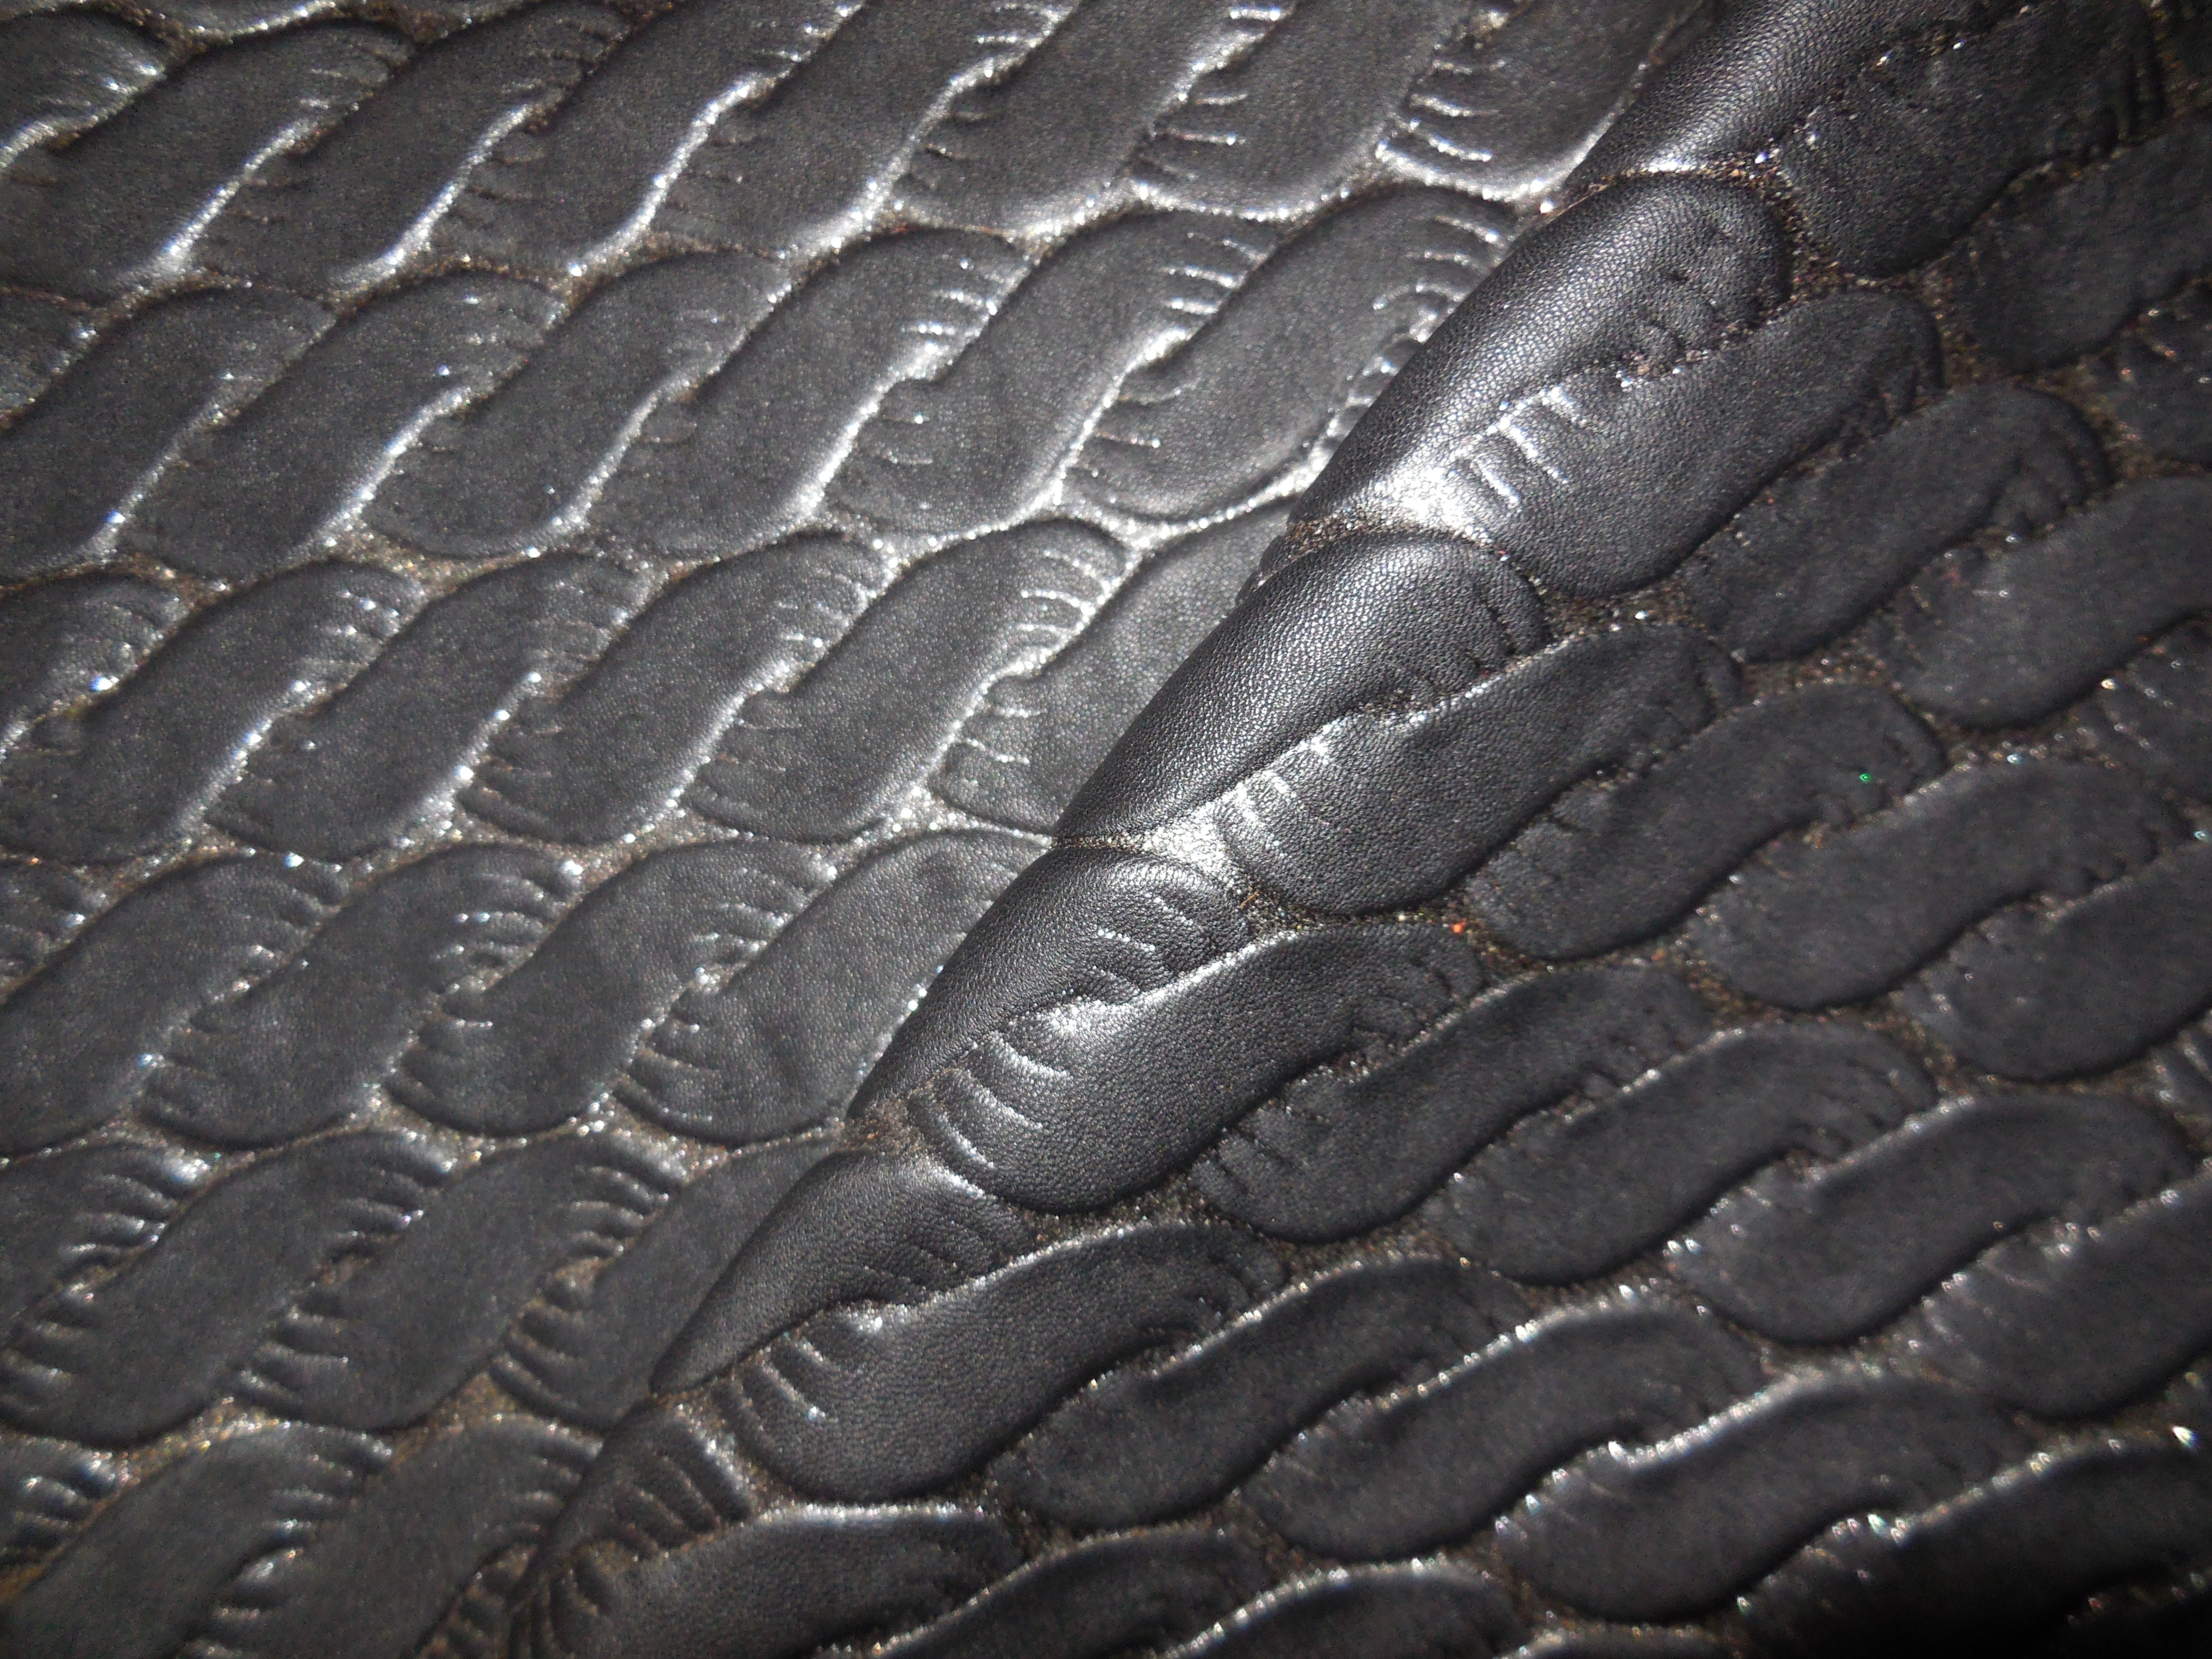 Skóra naturalna kaletnicza czarna _skóry naturalne kaletnicze na torebki w Leather-design.eu